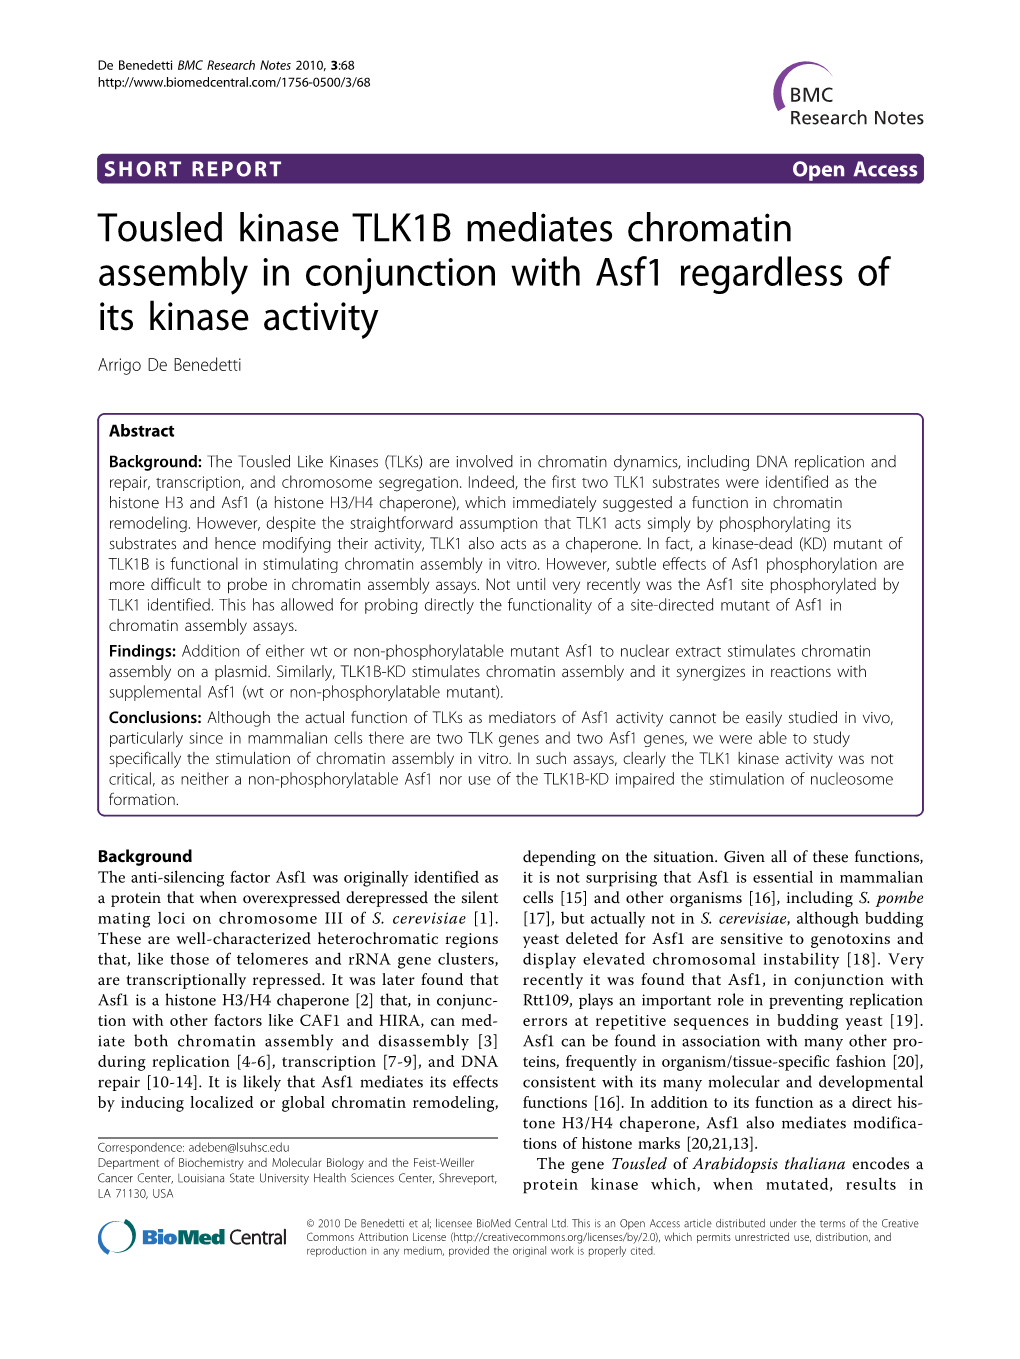 Tousled Kinase TLK1B Mediates Chromatin Assembly in Conjunction with Asf1 Regardless of Its Kinase Activity Arrigo De Benedetti